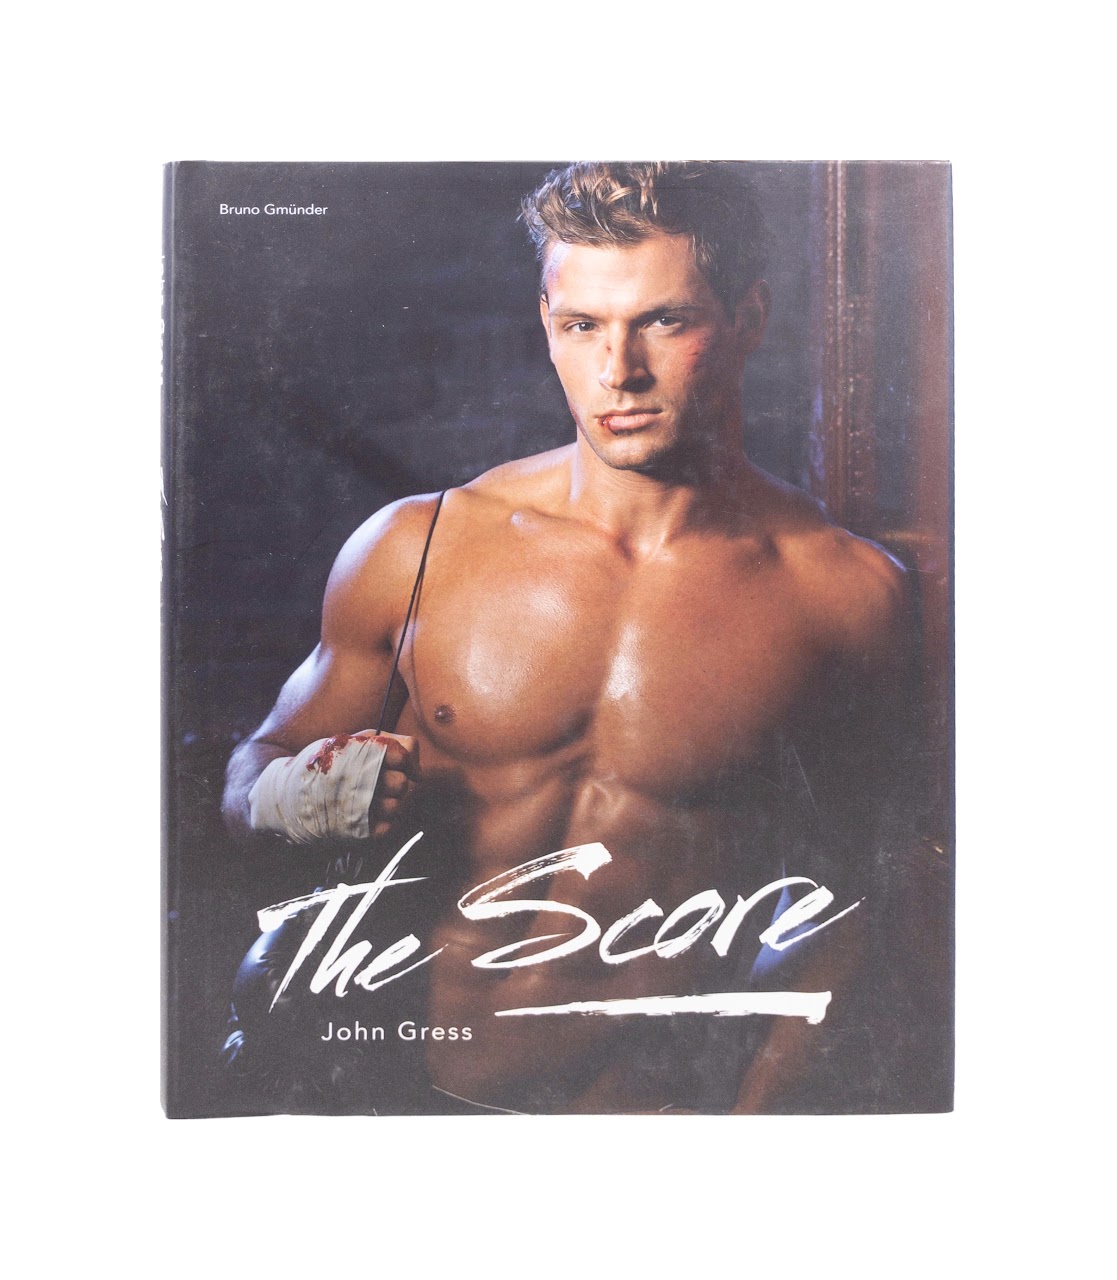 John Gress 'The Score' Photo Portrait Book